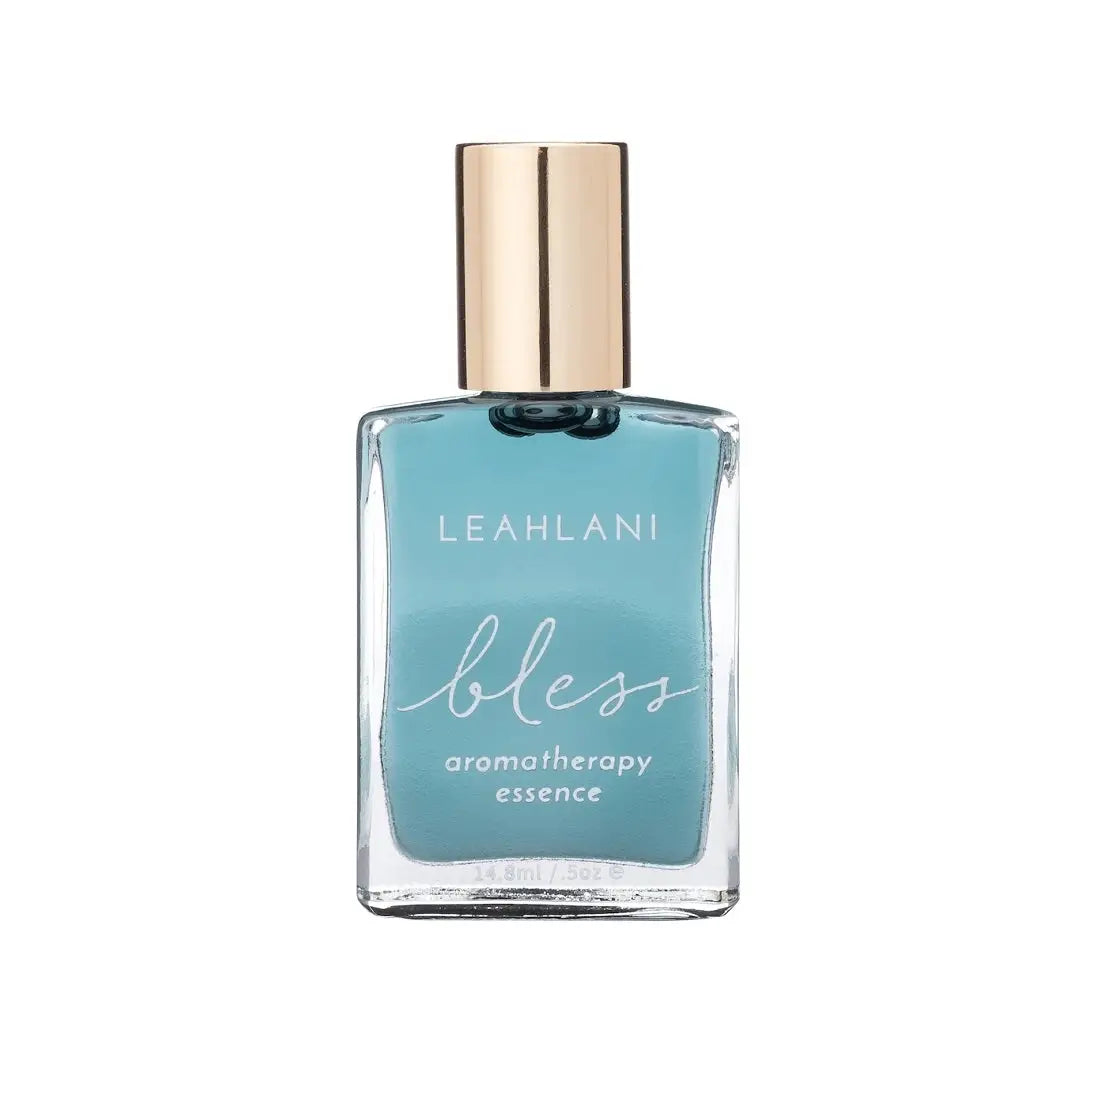 Leahlani Skincare Bless Essence 14.8ml